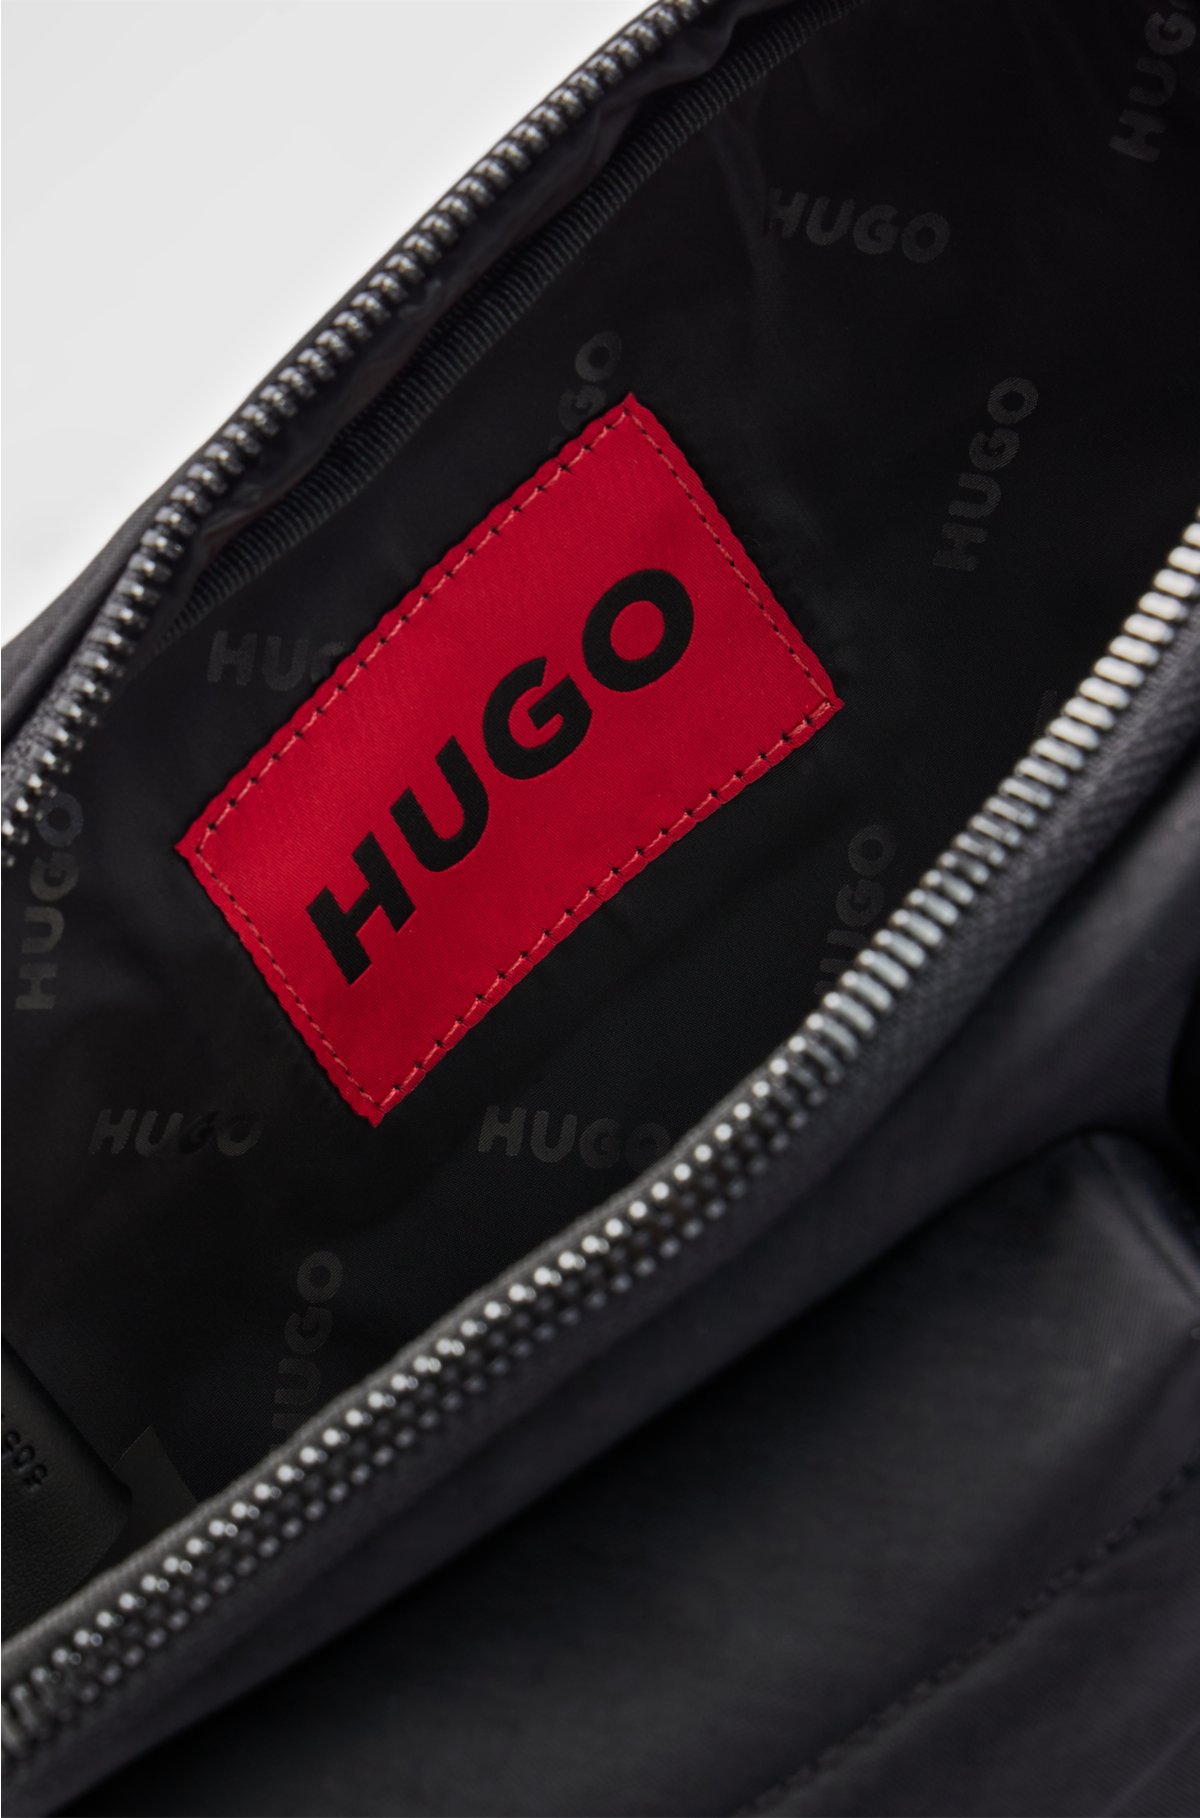 HUGO branded strap - adjustable bag with Cross-body